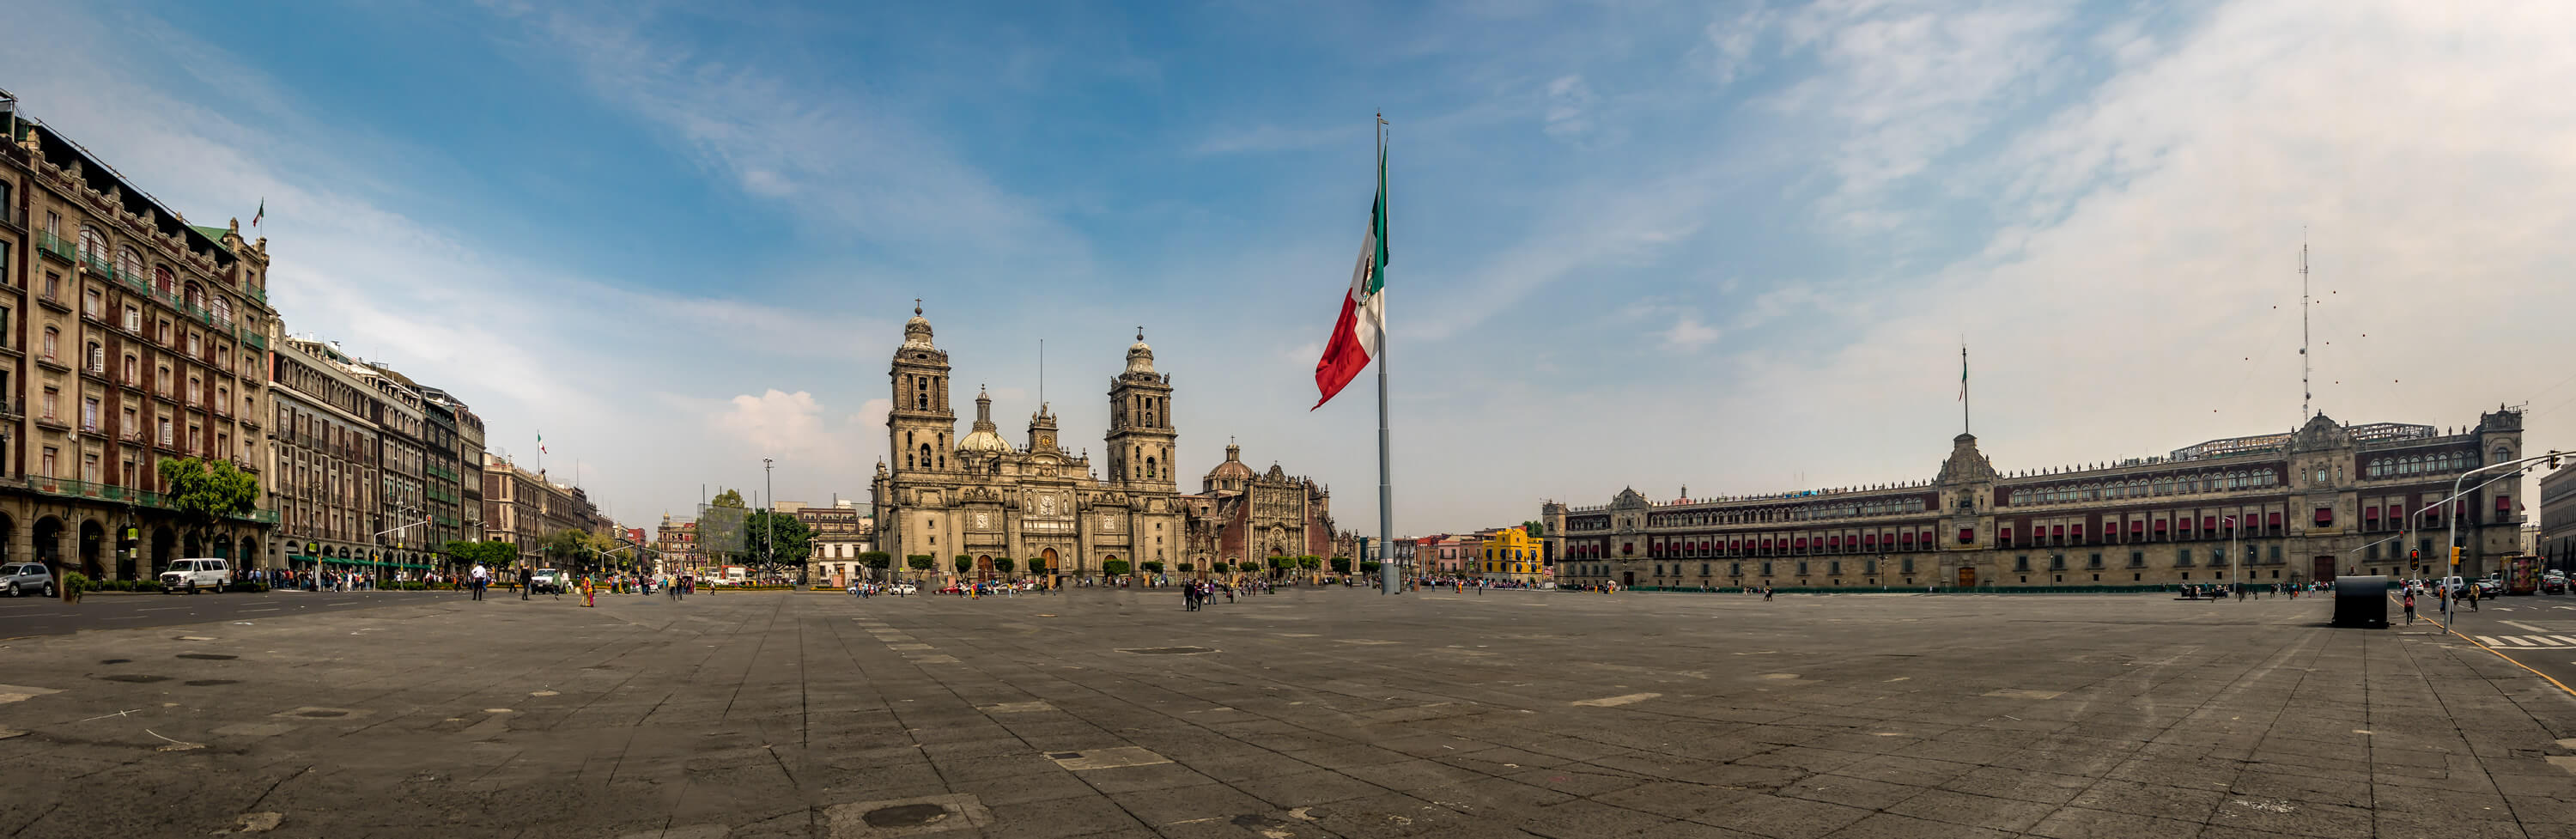 Zocalo Cathedral Mexico City